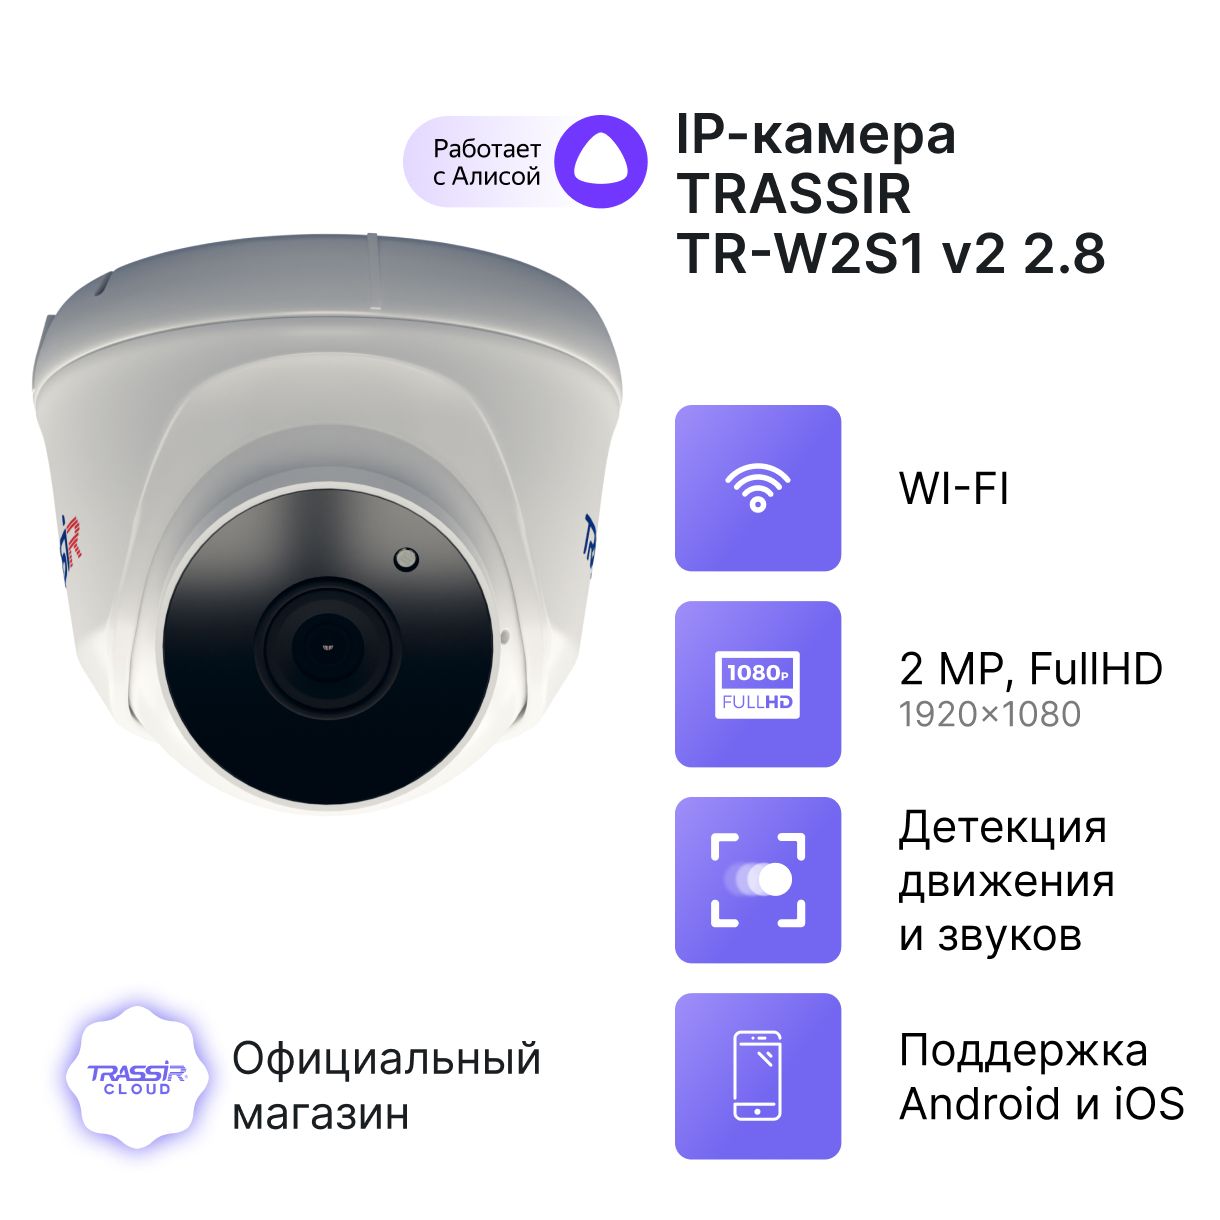 Камера видеонаблюдения облачная TRASSIR TR-W2S1 v2 2.8 с wi fi